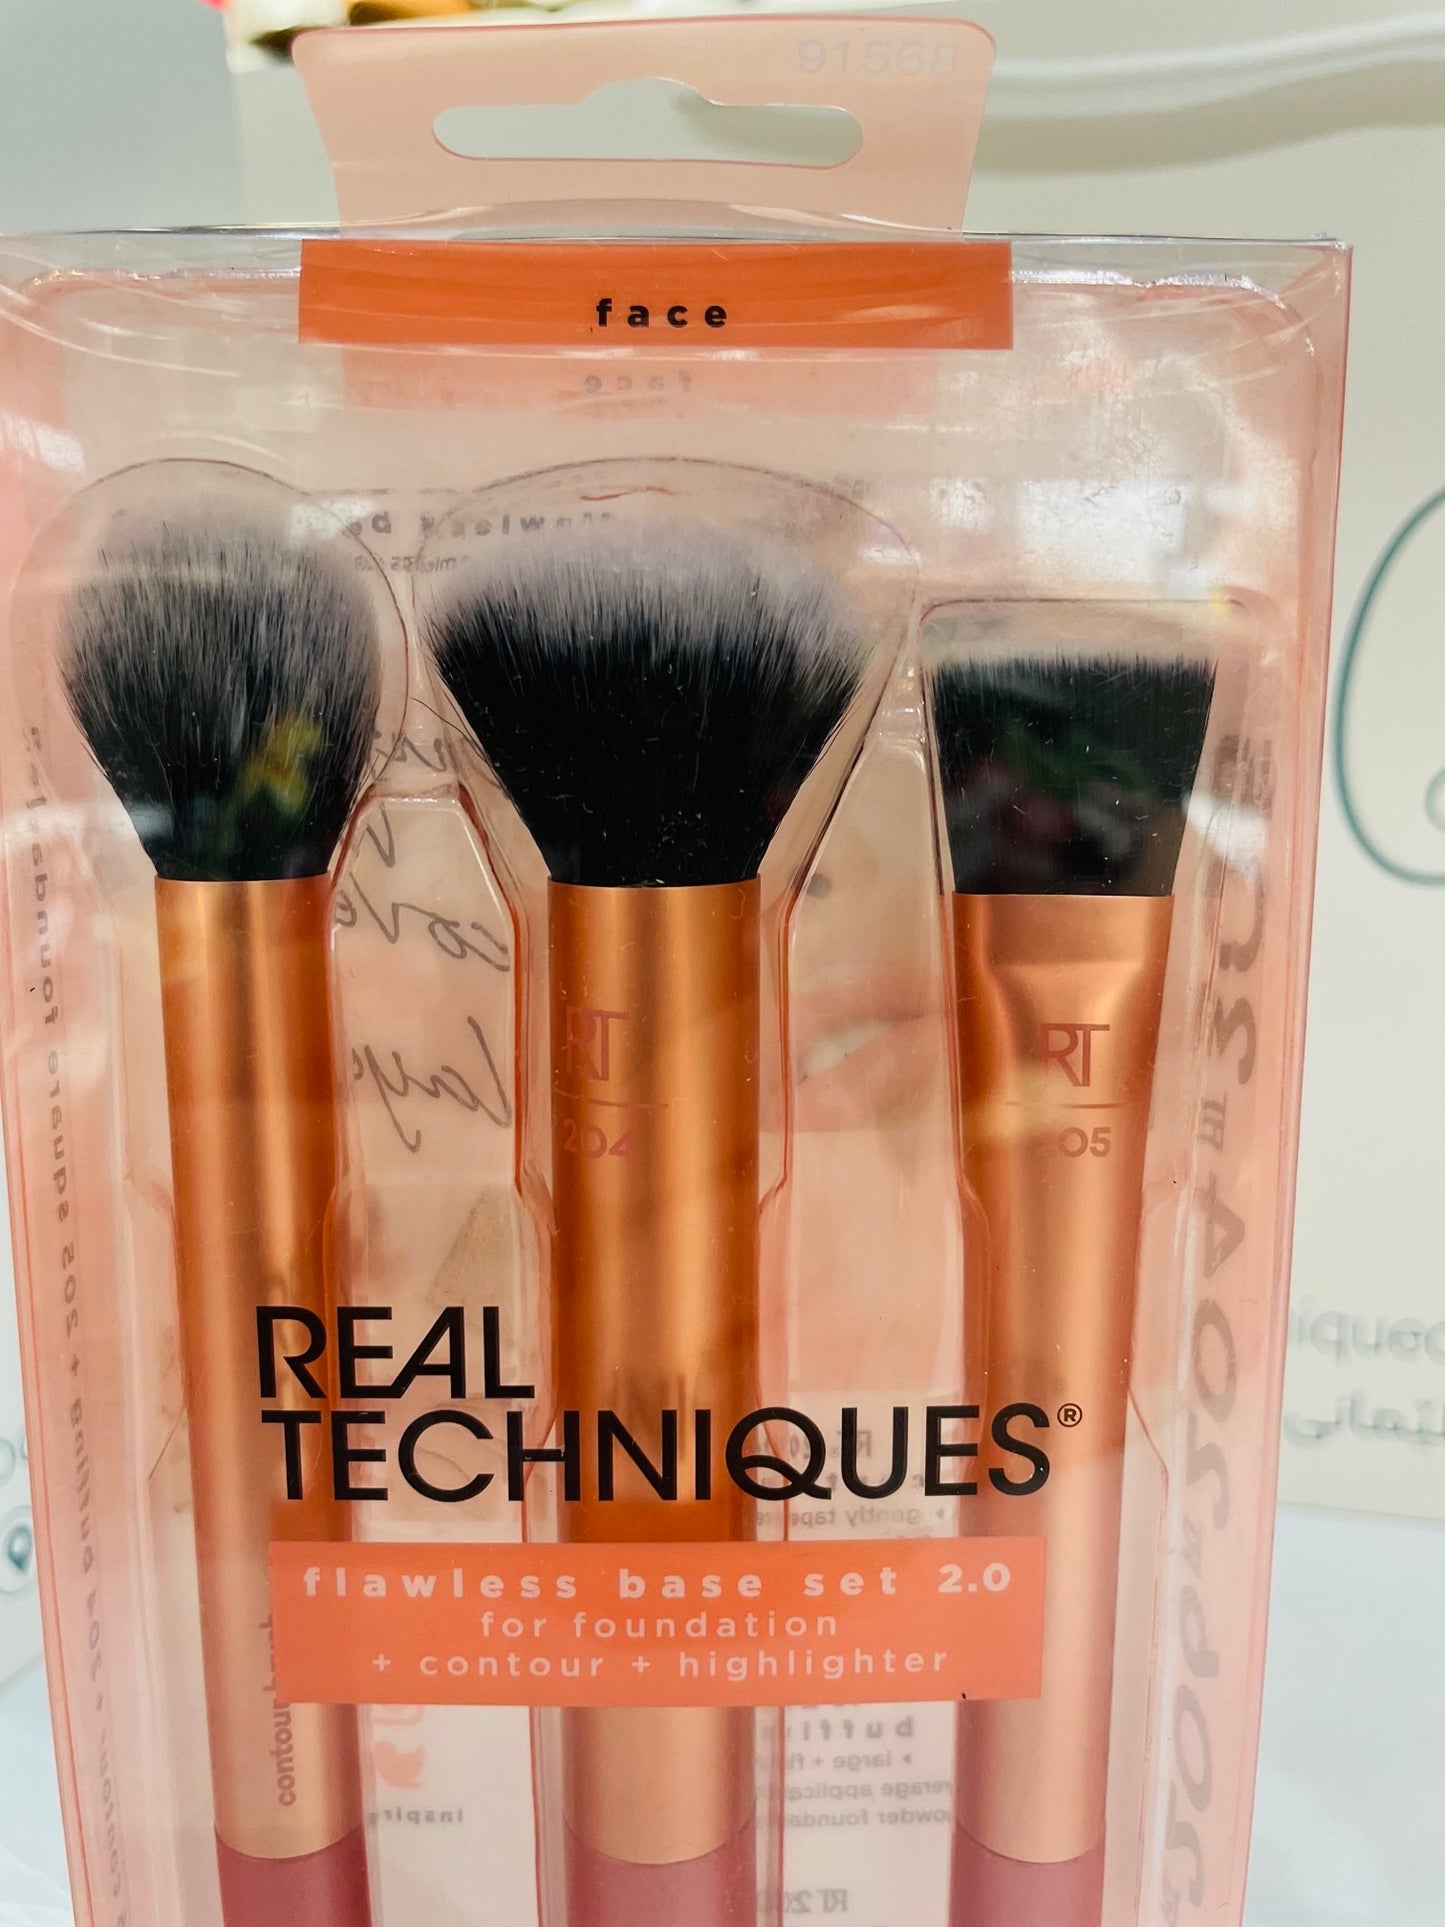 Real techniques brush set